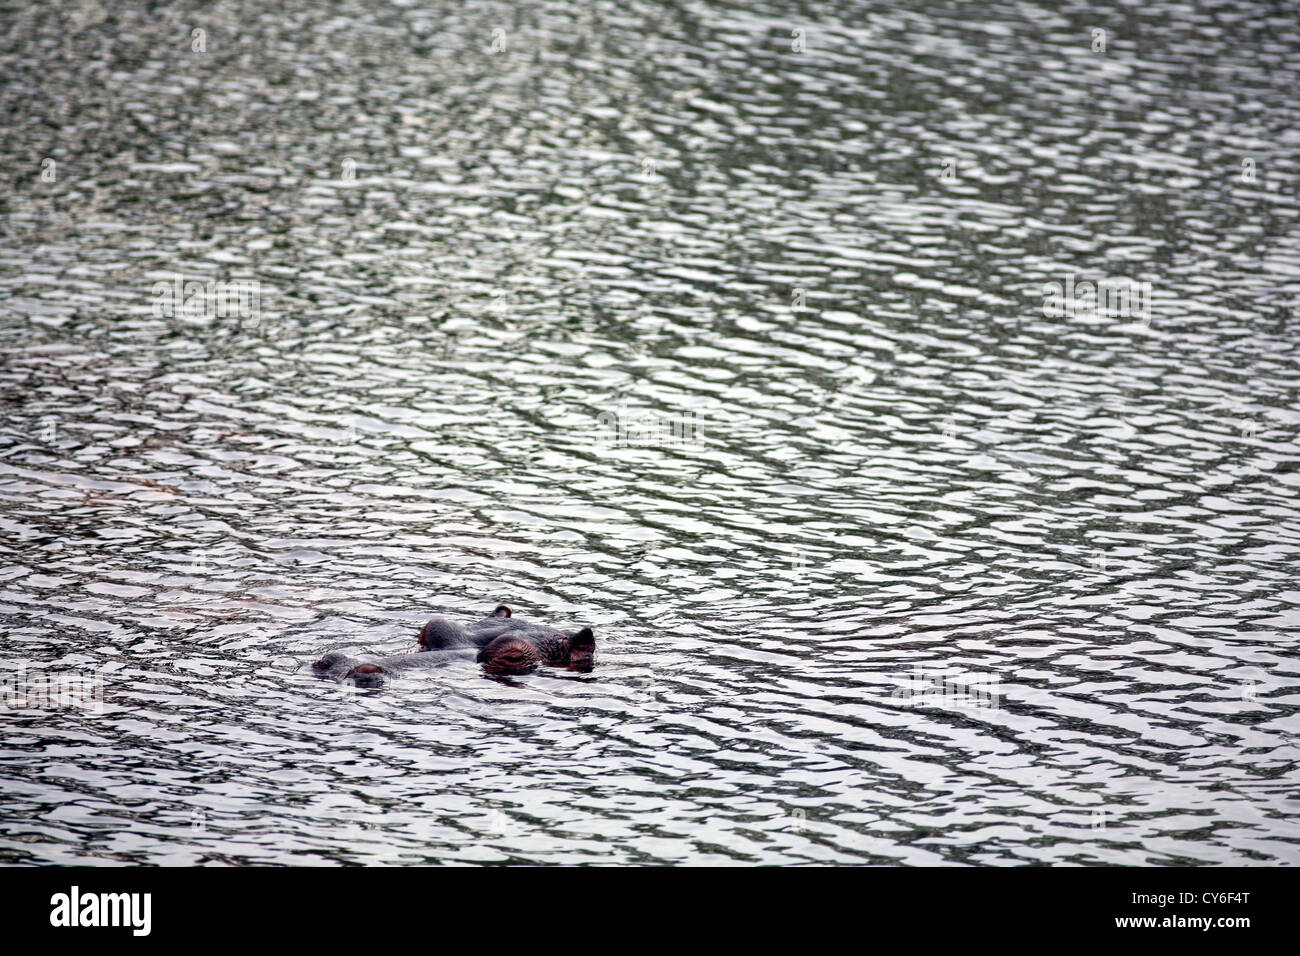 Hippopotamus, Tsavo East National Park, Kenya. Stock Photo